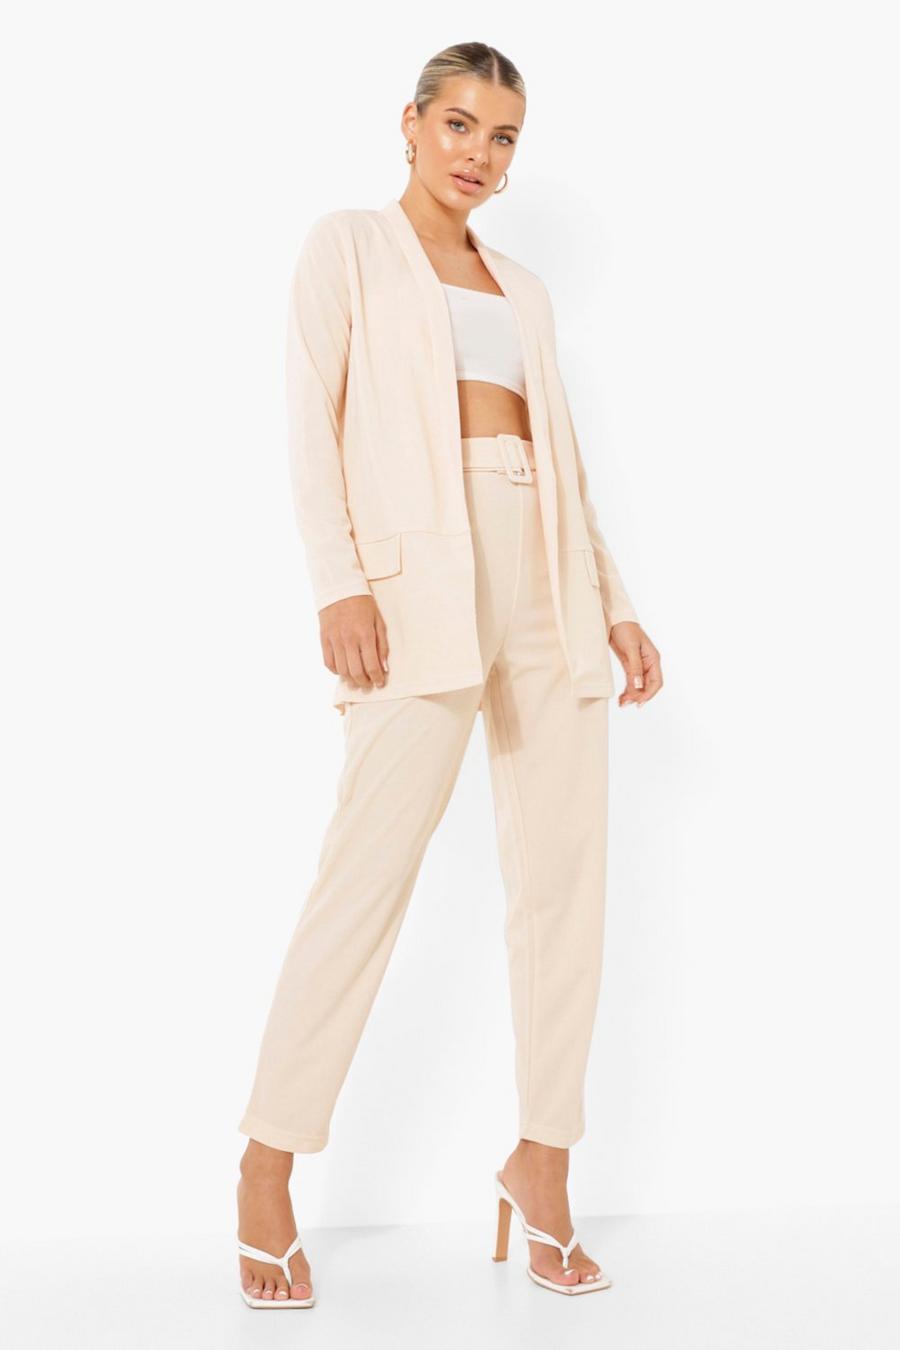 Blush pink Blazer & Self Fabric Pants Suit Set